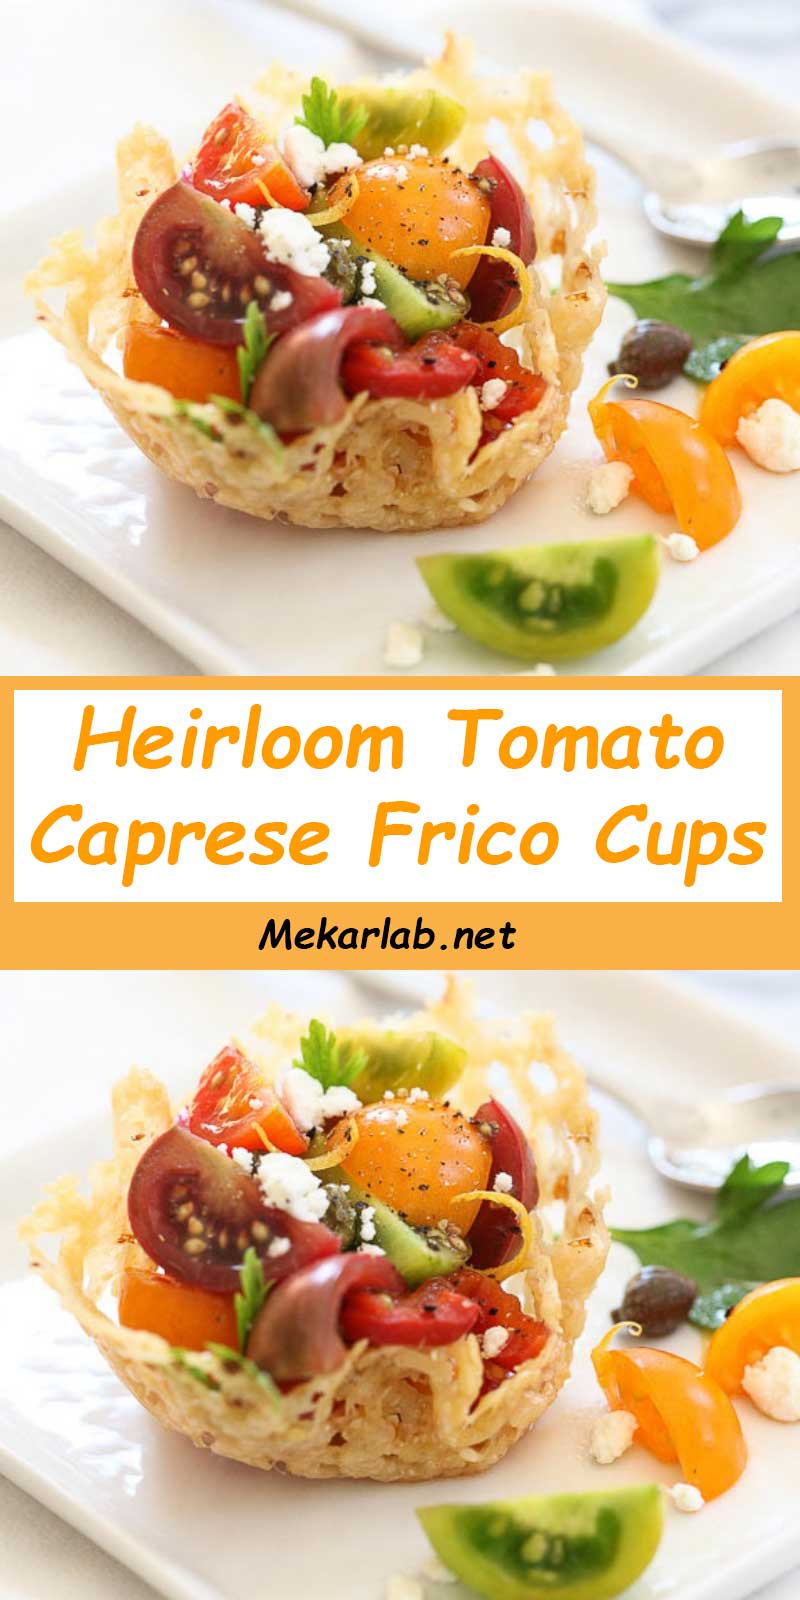 Heirloom Tomato Caprese Frico Cups